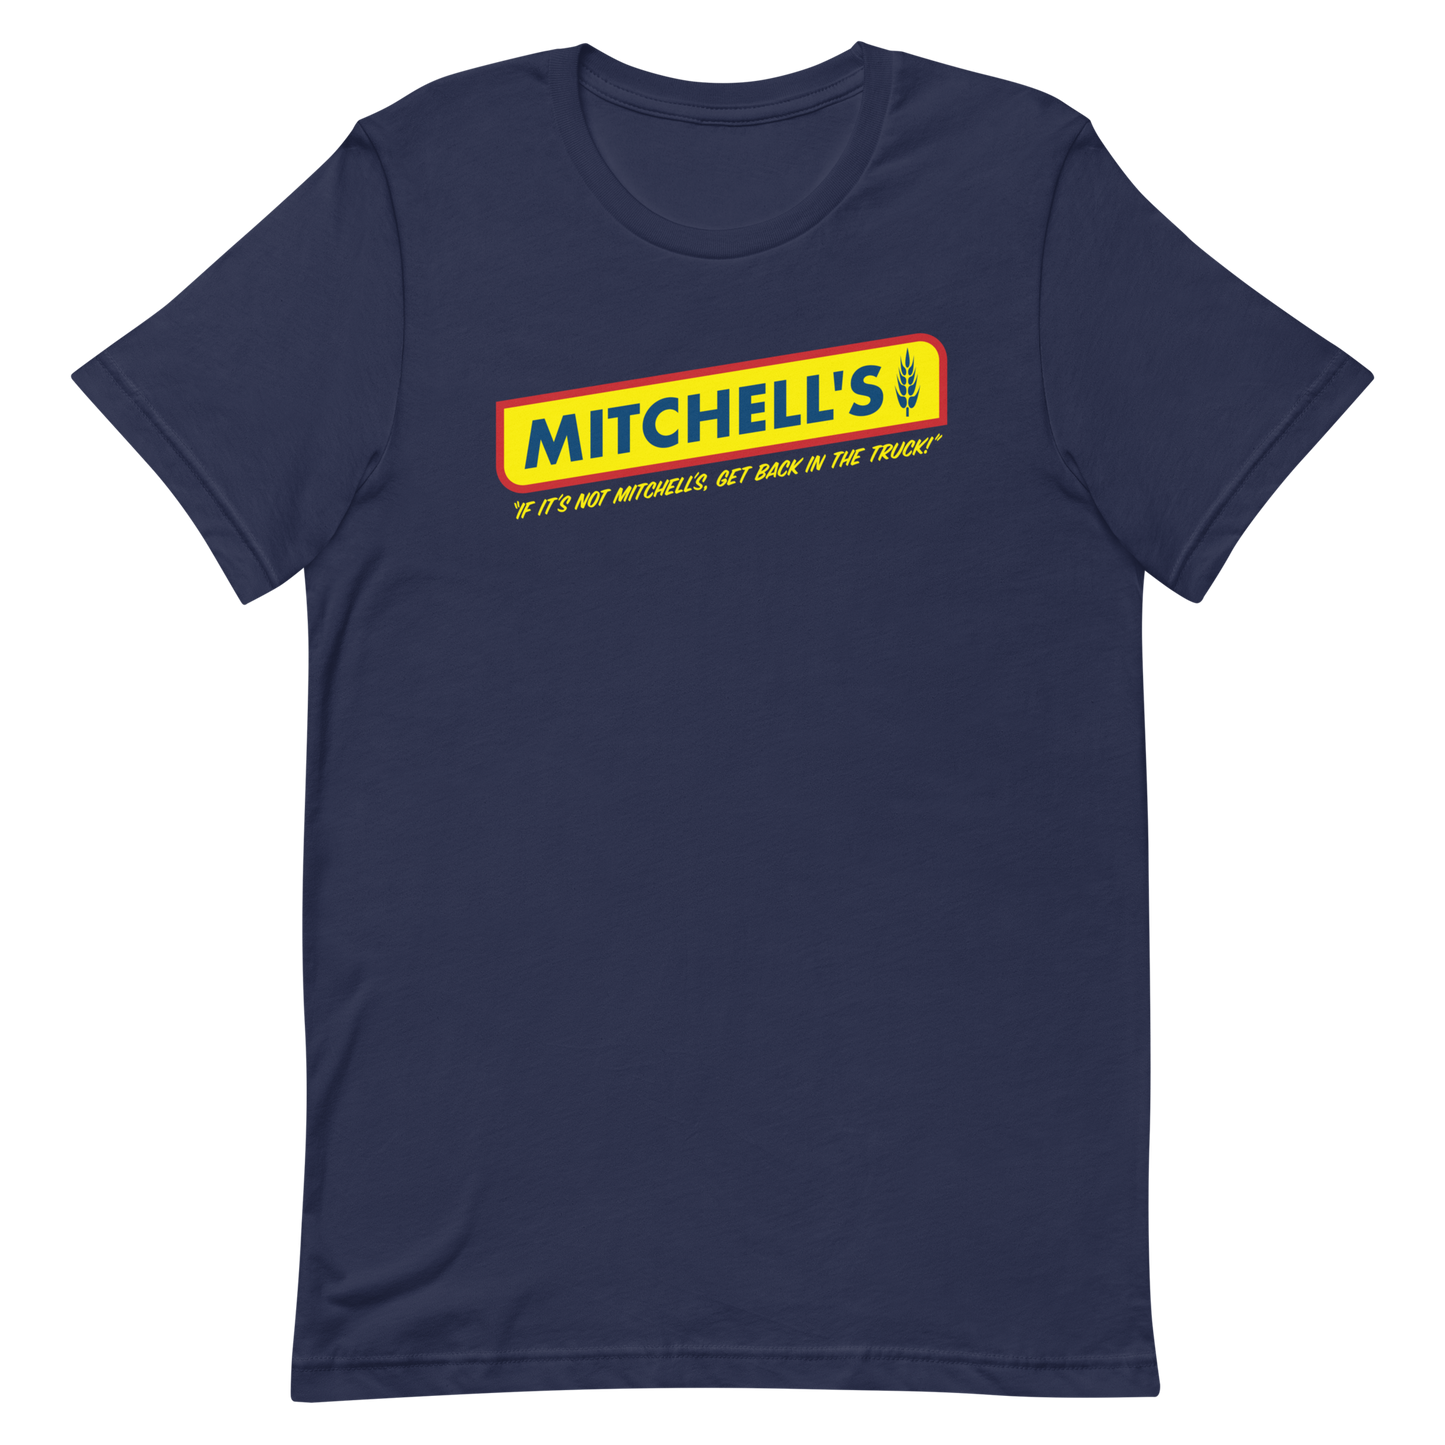 Mitchell's T-shirt